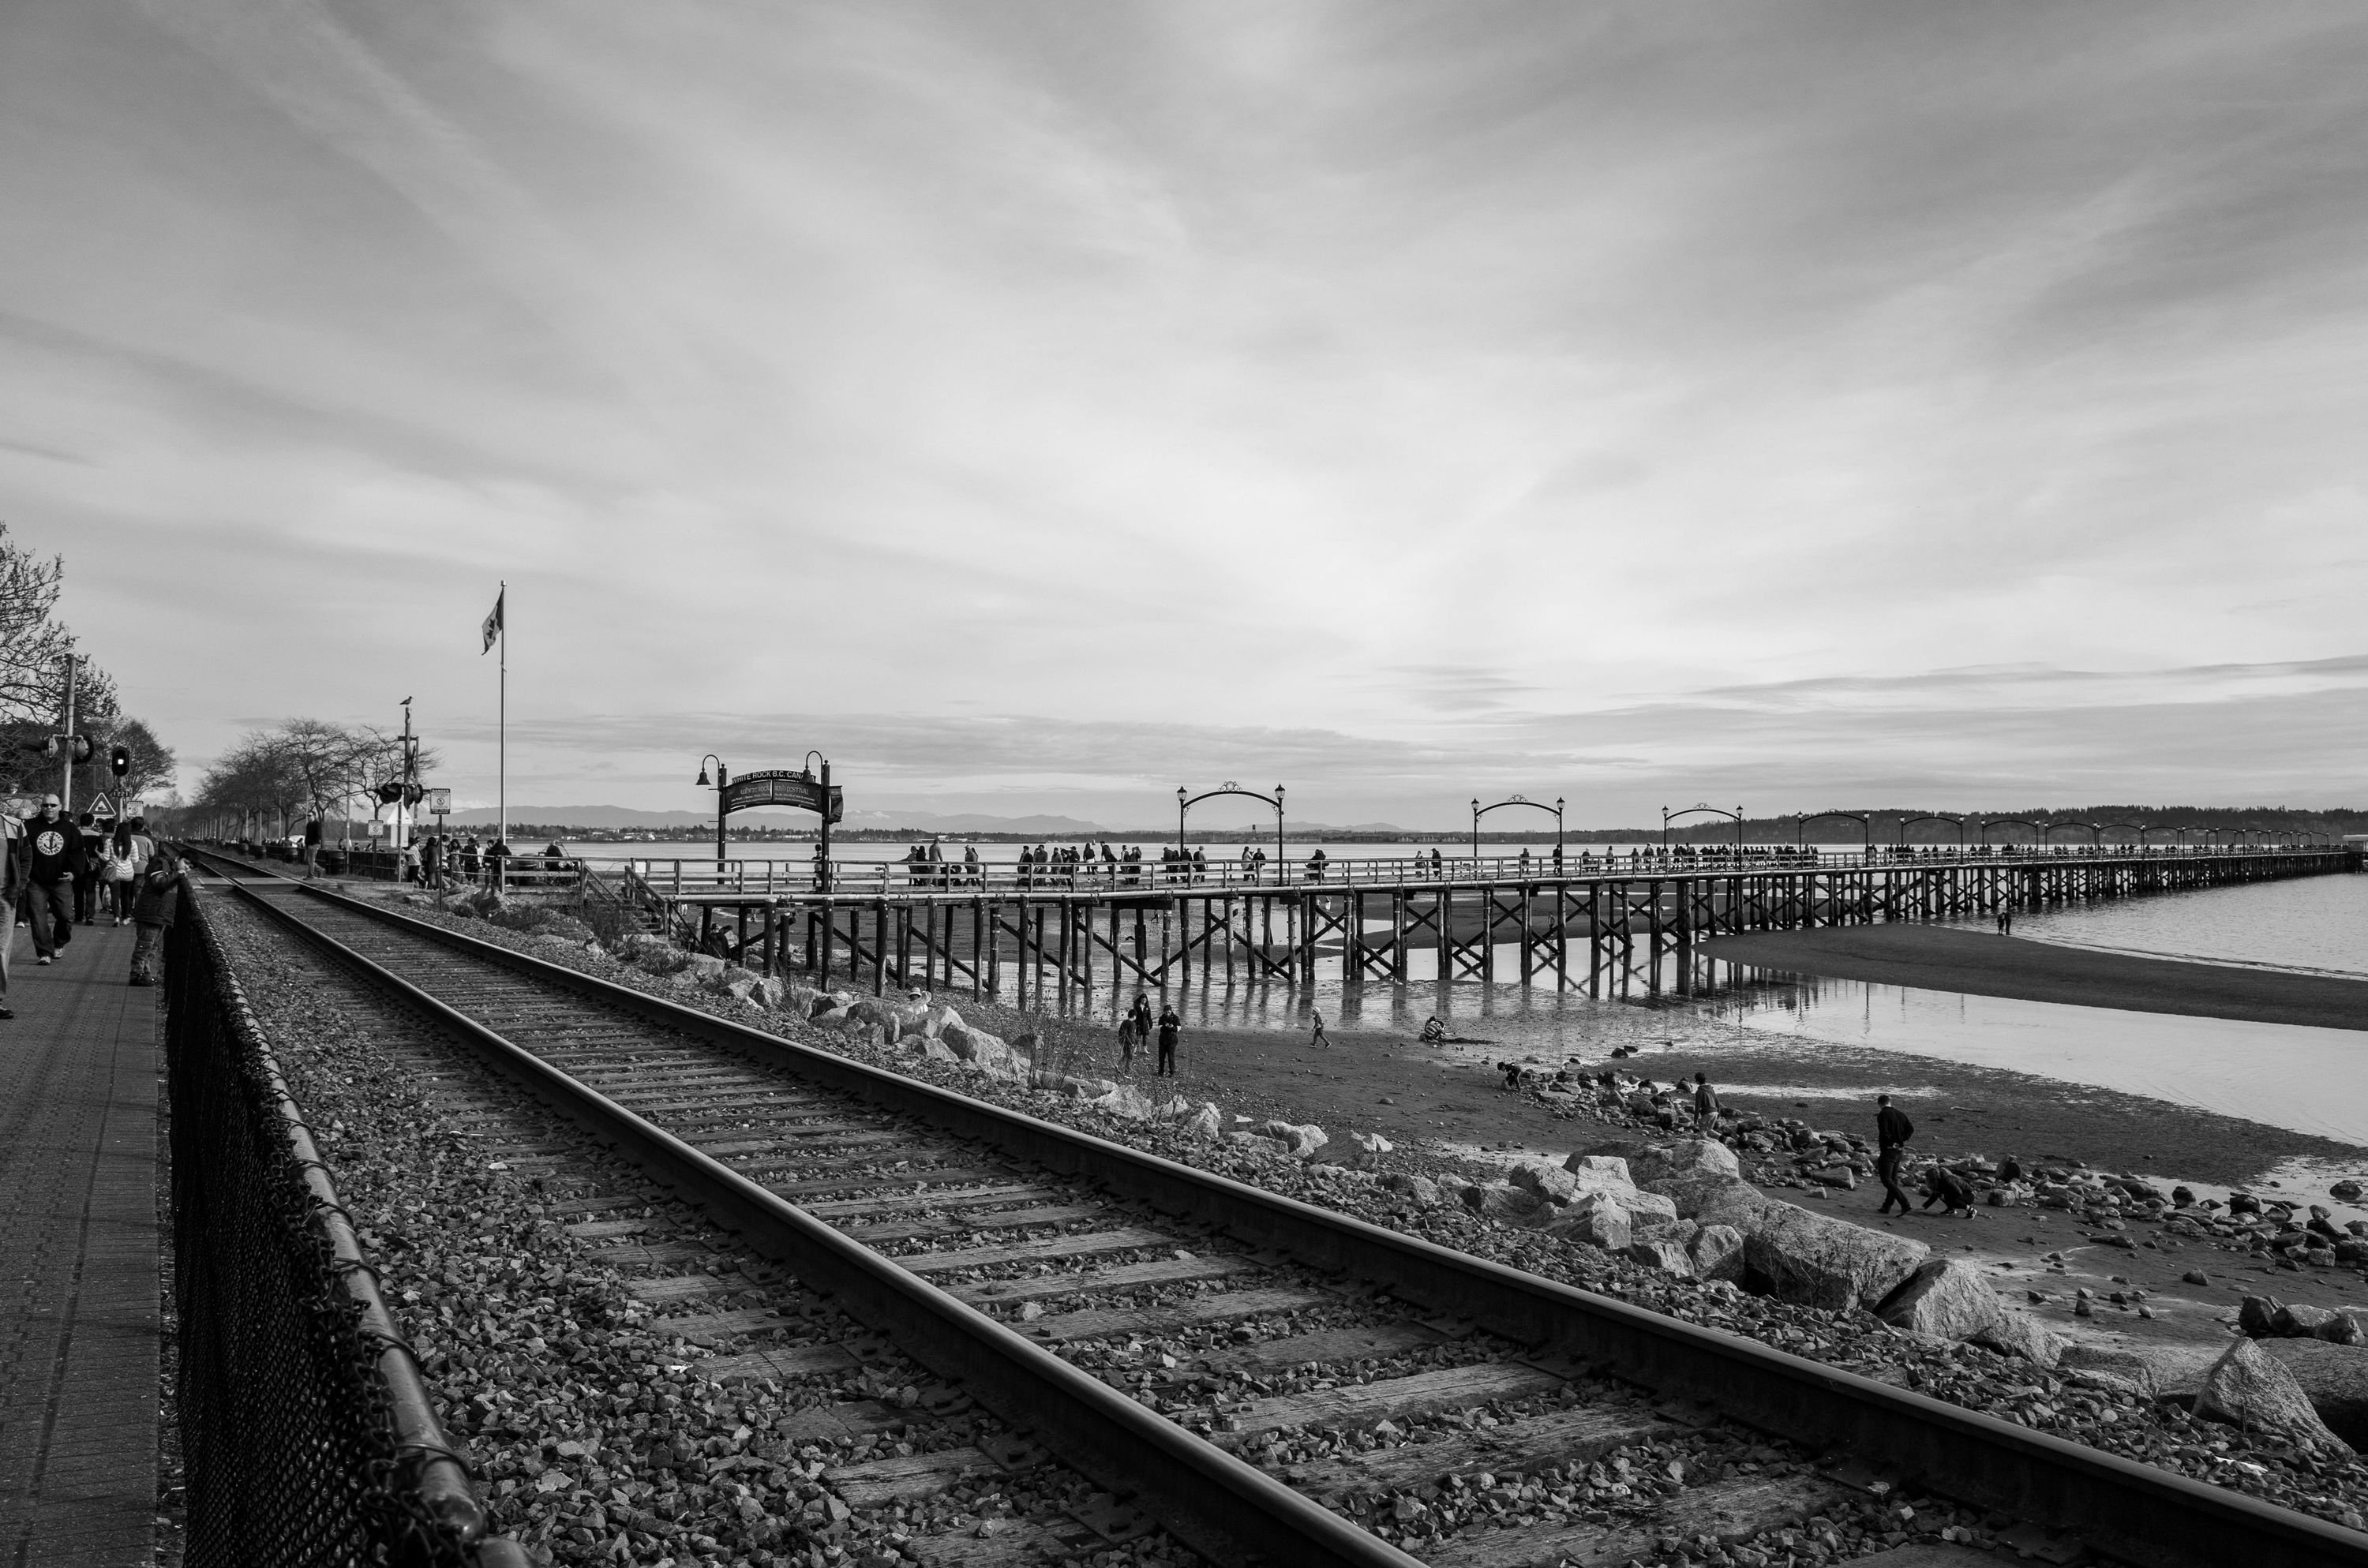 Tracks & Pier